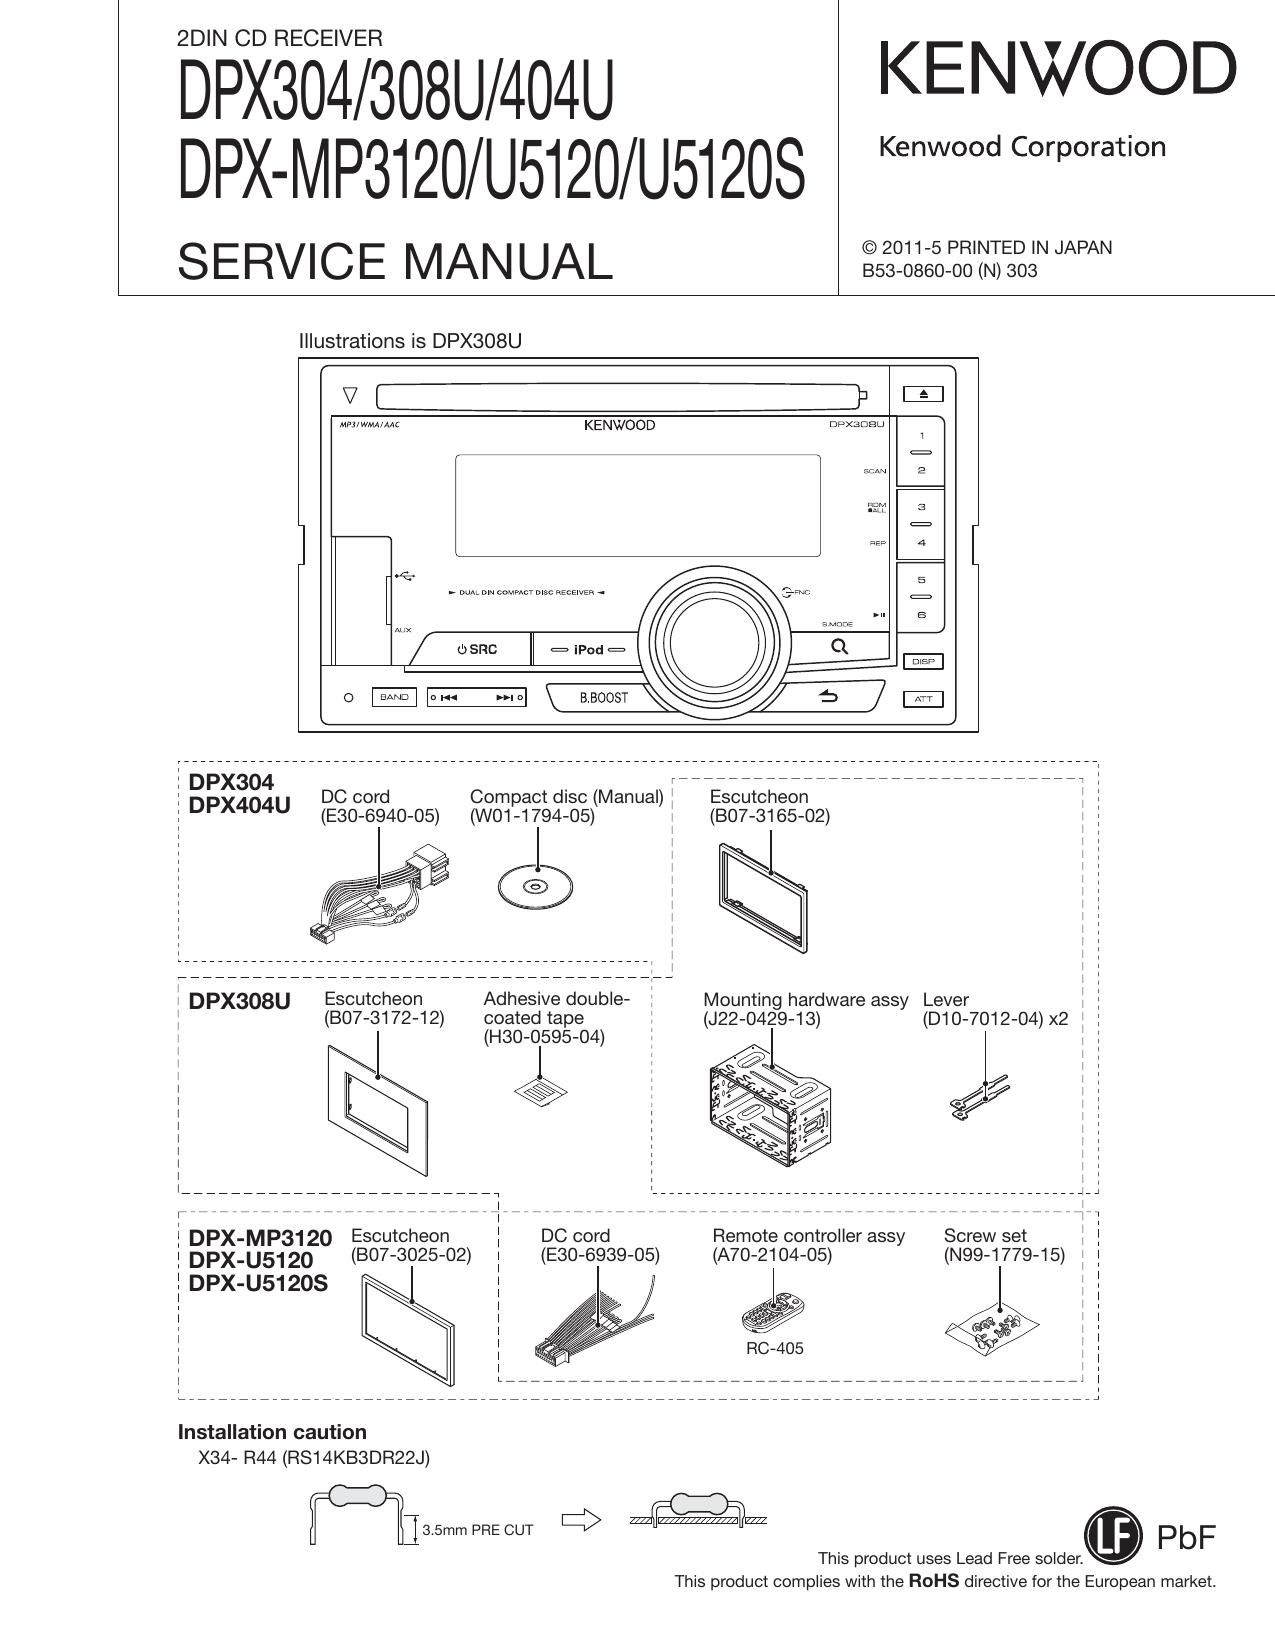 Kenwood DPX 404 U Service Manual